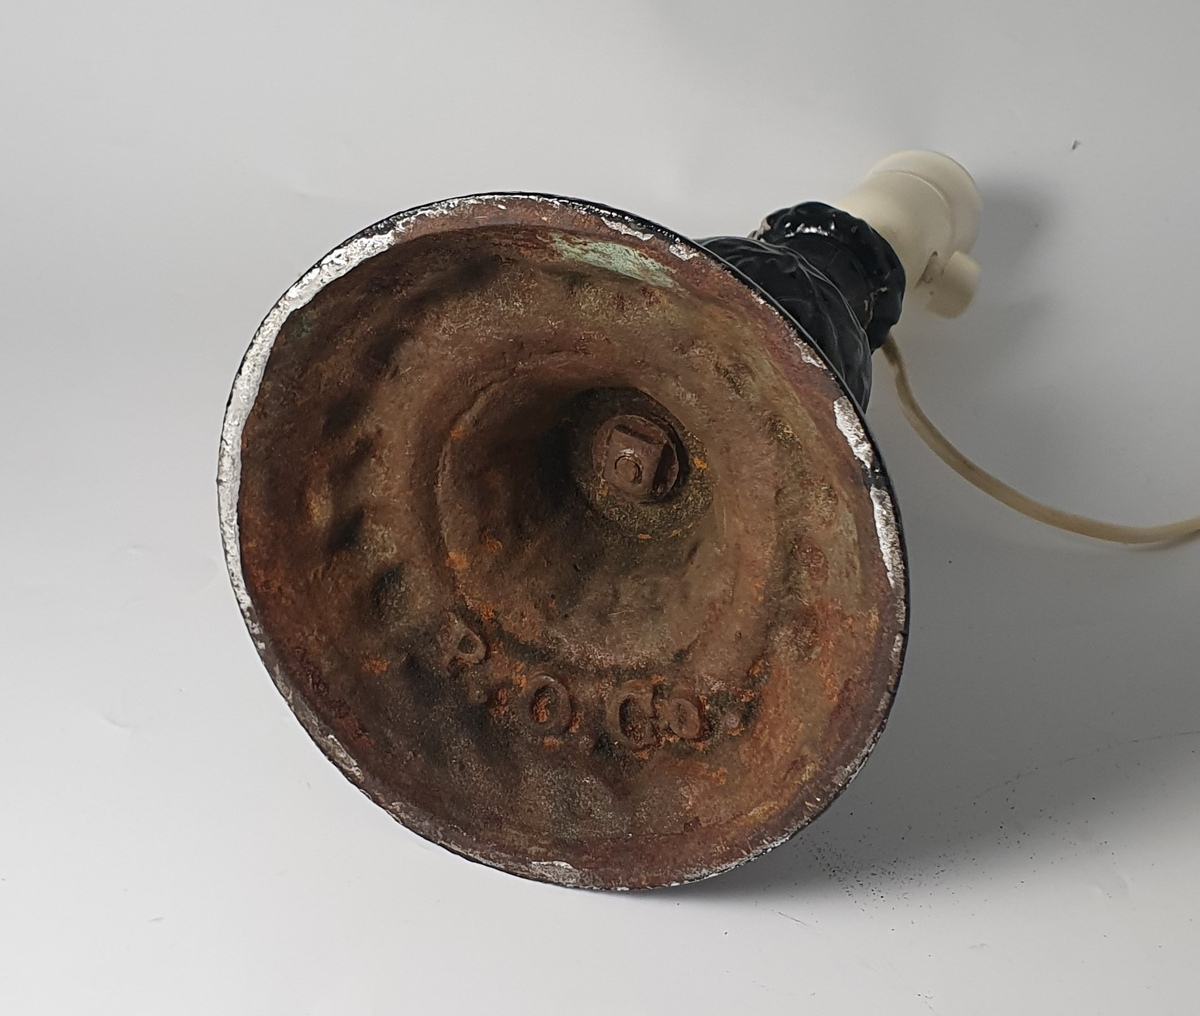 Elektrisk lampe med støpt fot fra Mandals Værksted, et støperi på Sanden i Mandal. Lampeføttene ble produsert for Mandal Paraffin Olie Co. på Risøbank ved Mandal. Parafinoljefabrikken var virksom fra 1862 til 1872.